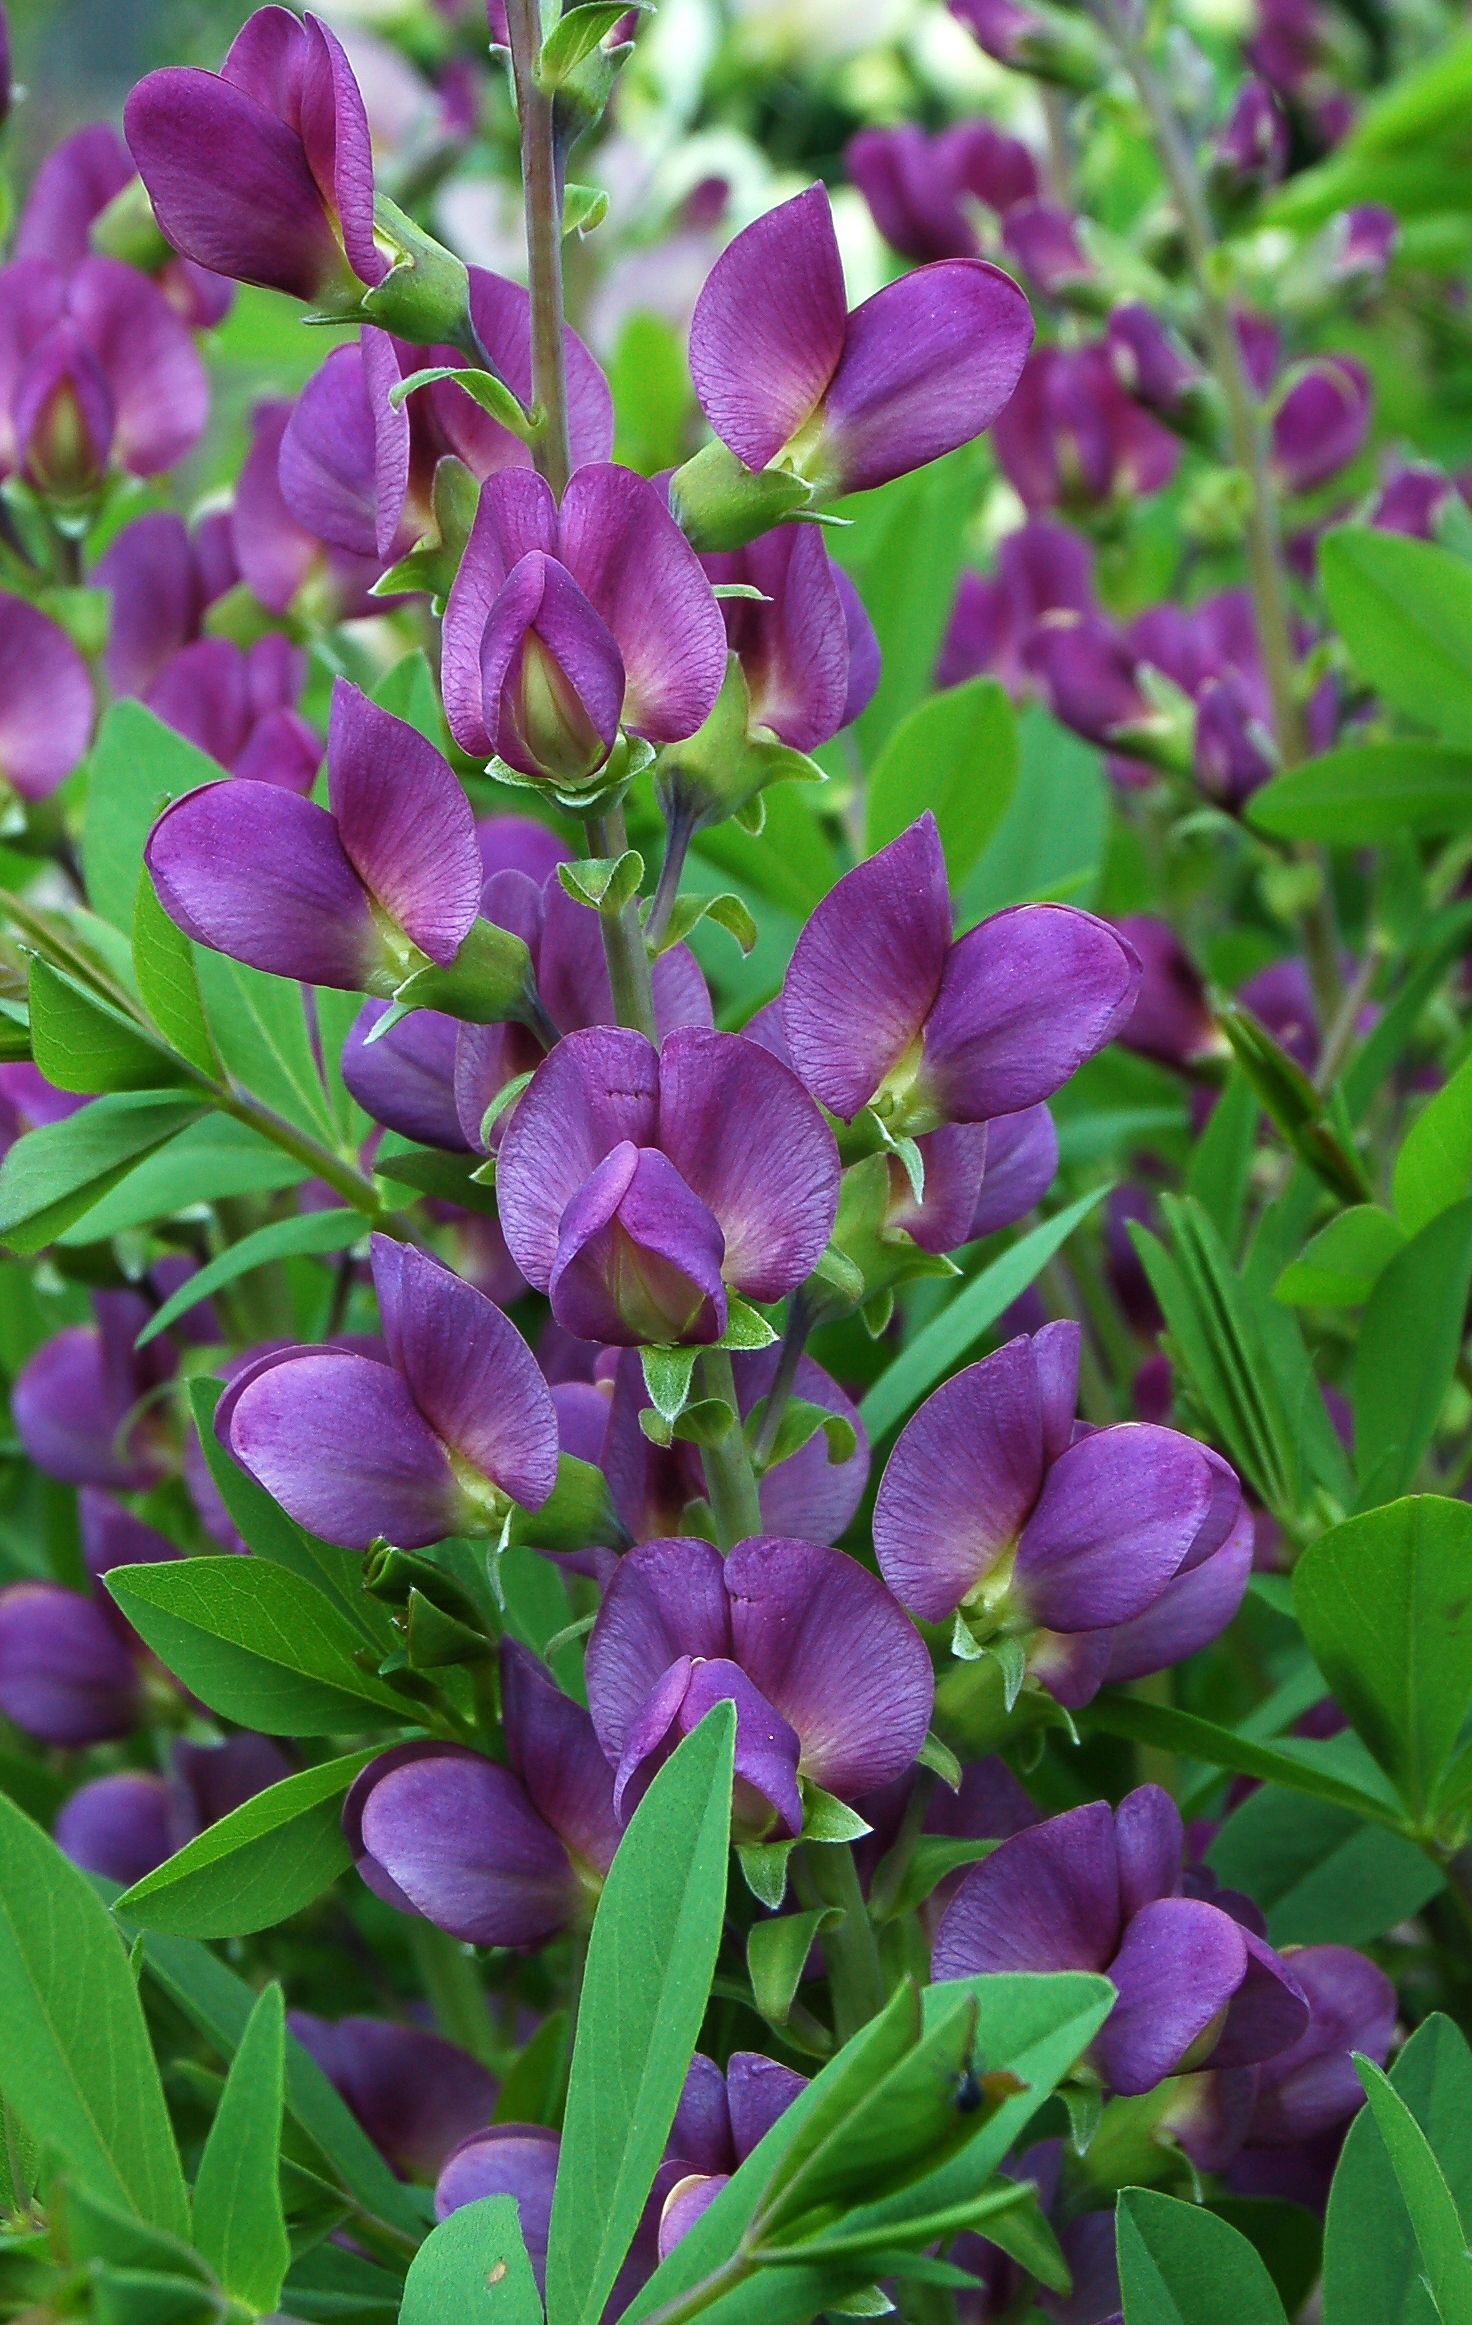 images/plants/baptisia/bap-lavendar-rose/bap-lavendar-rose-0010.jpg